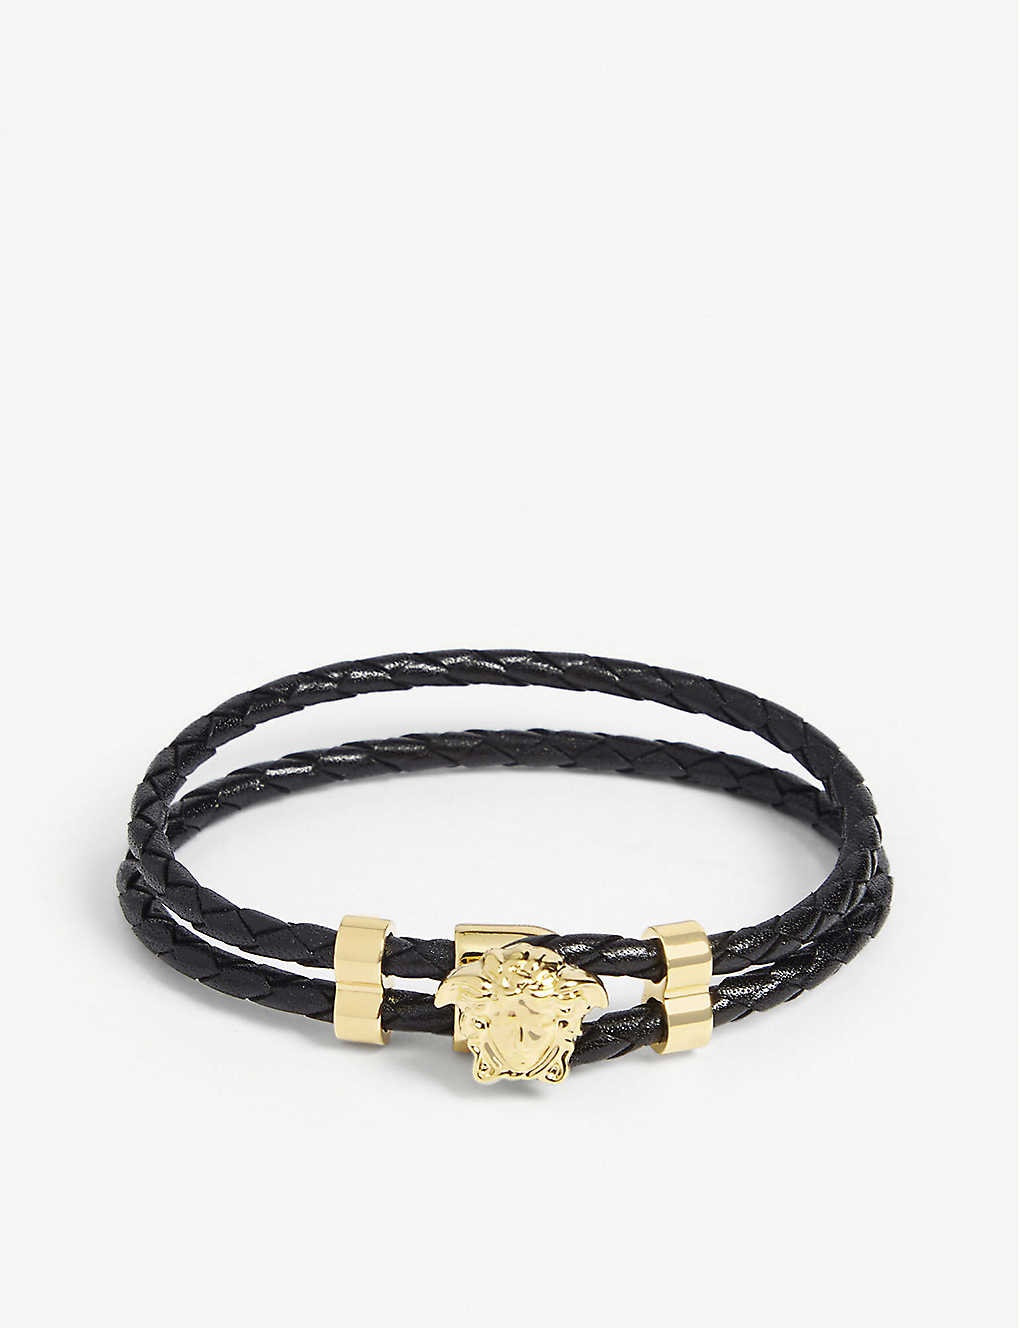 Medusa braided leather bracelet - 1